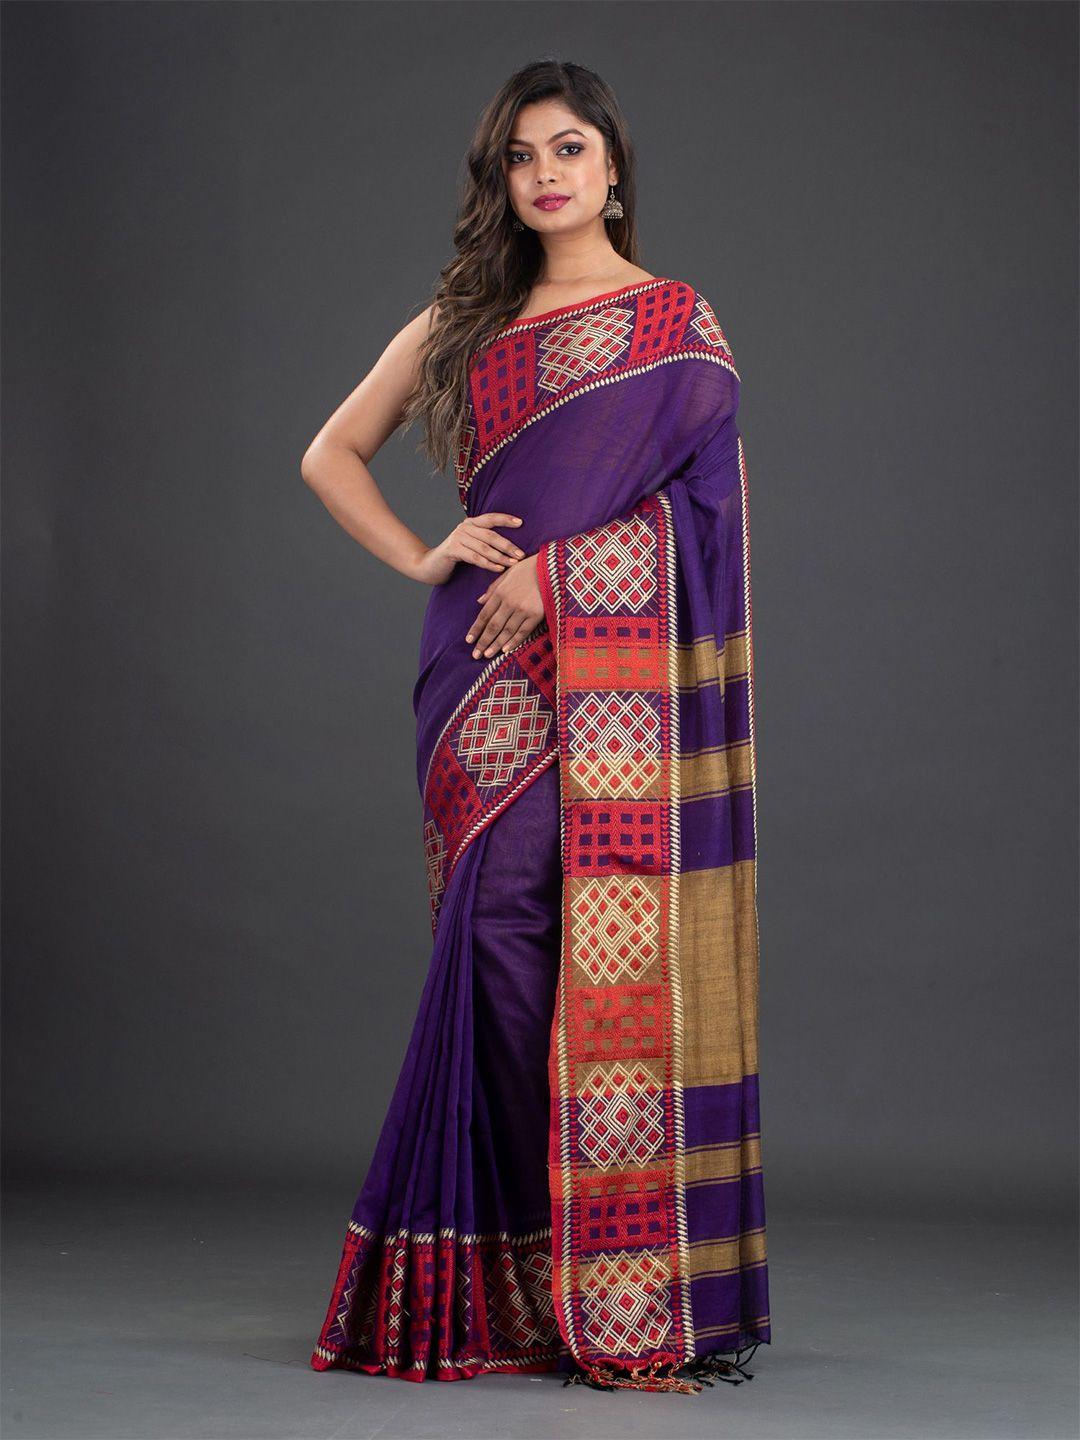 arhi violet & red pure cotton saree